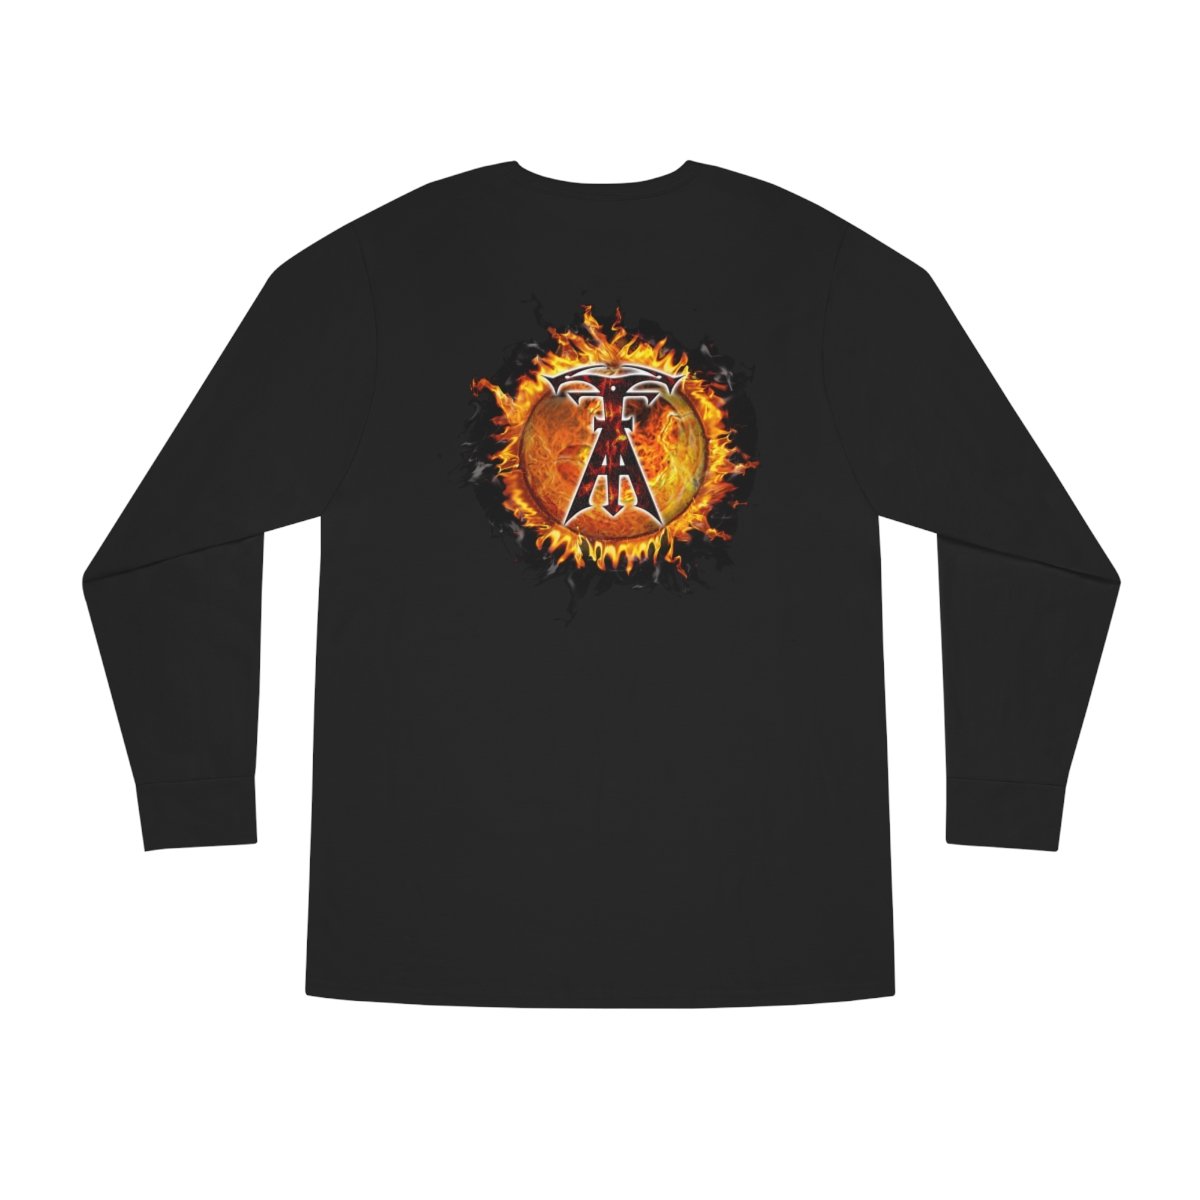 Altarfyre Fire Logo Long Sleeve Tshirt (2-Sided)